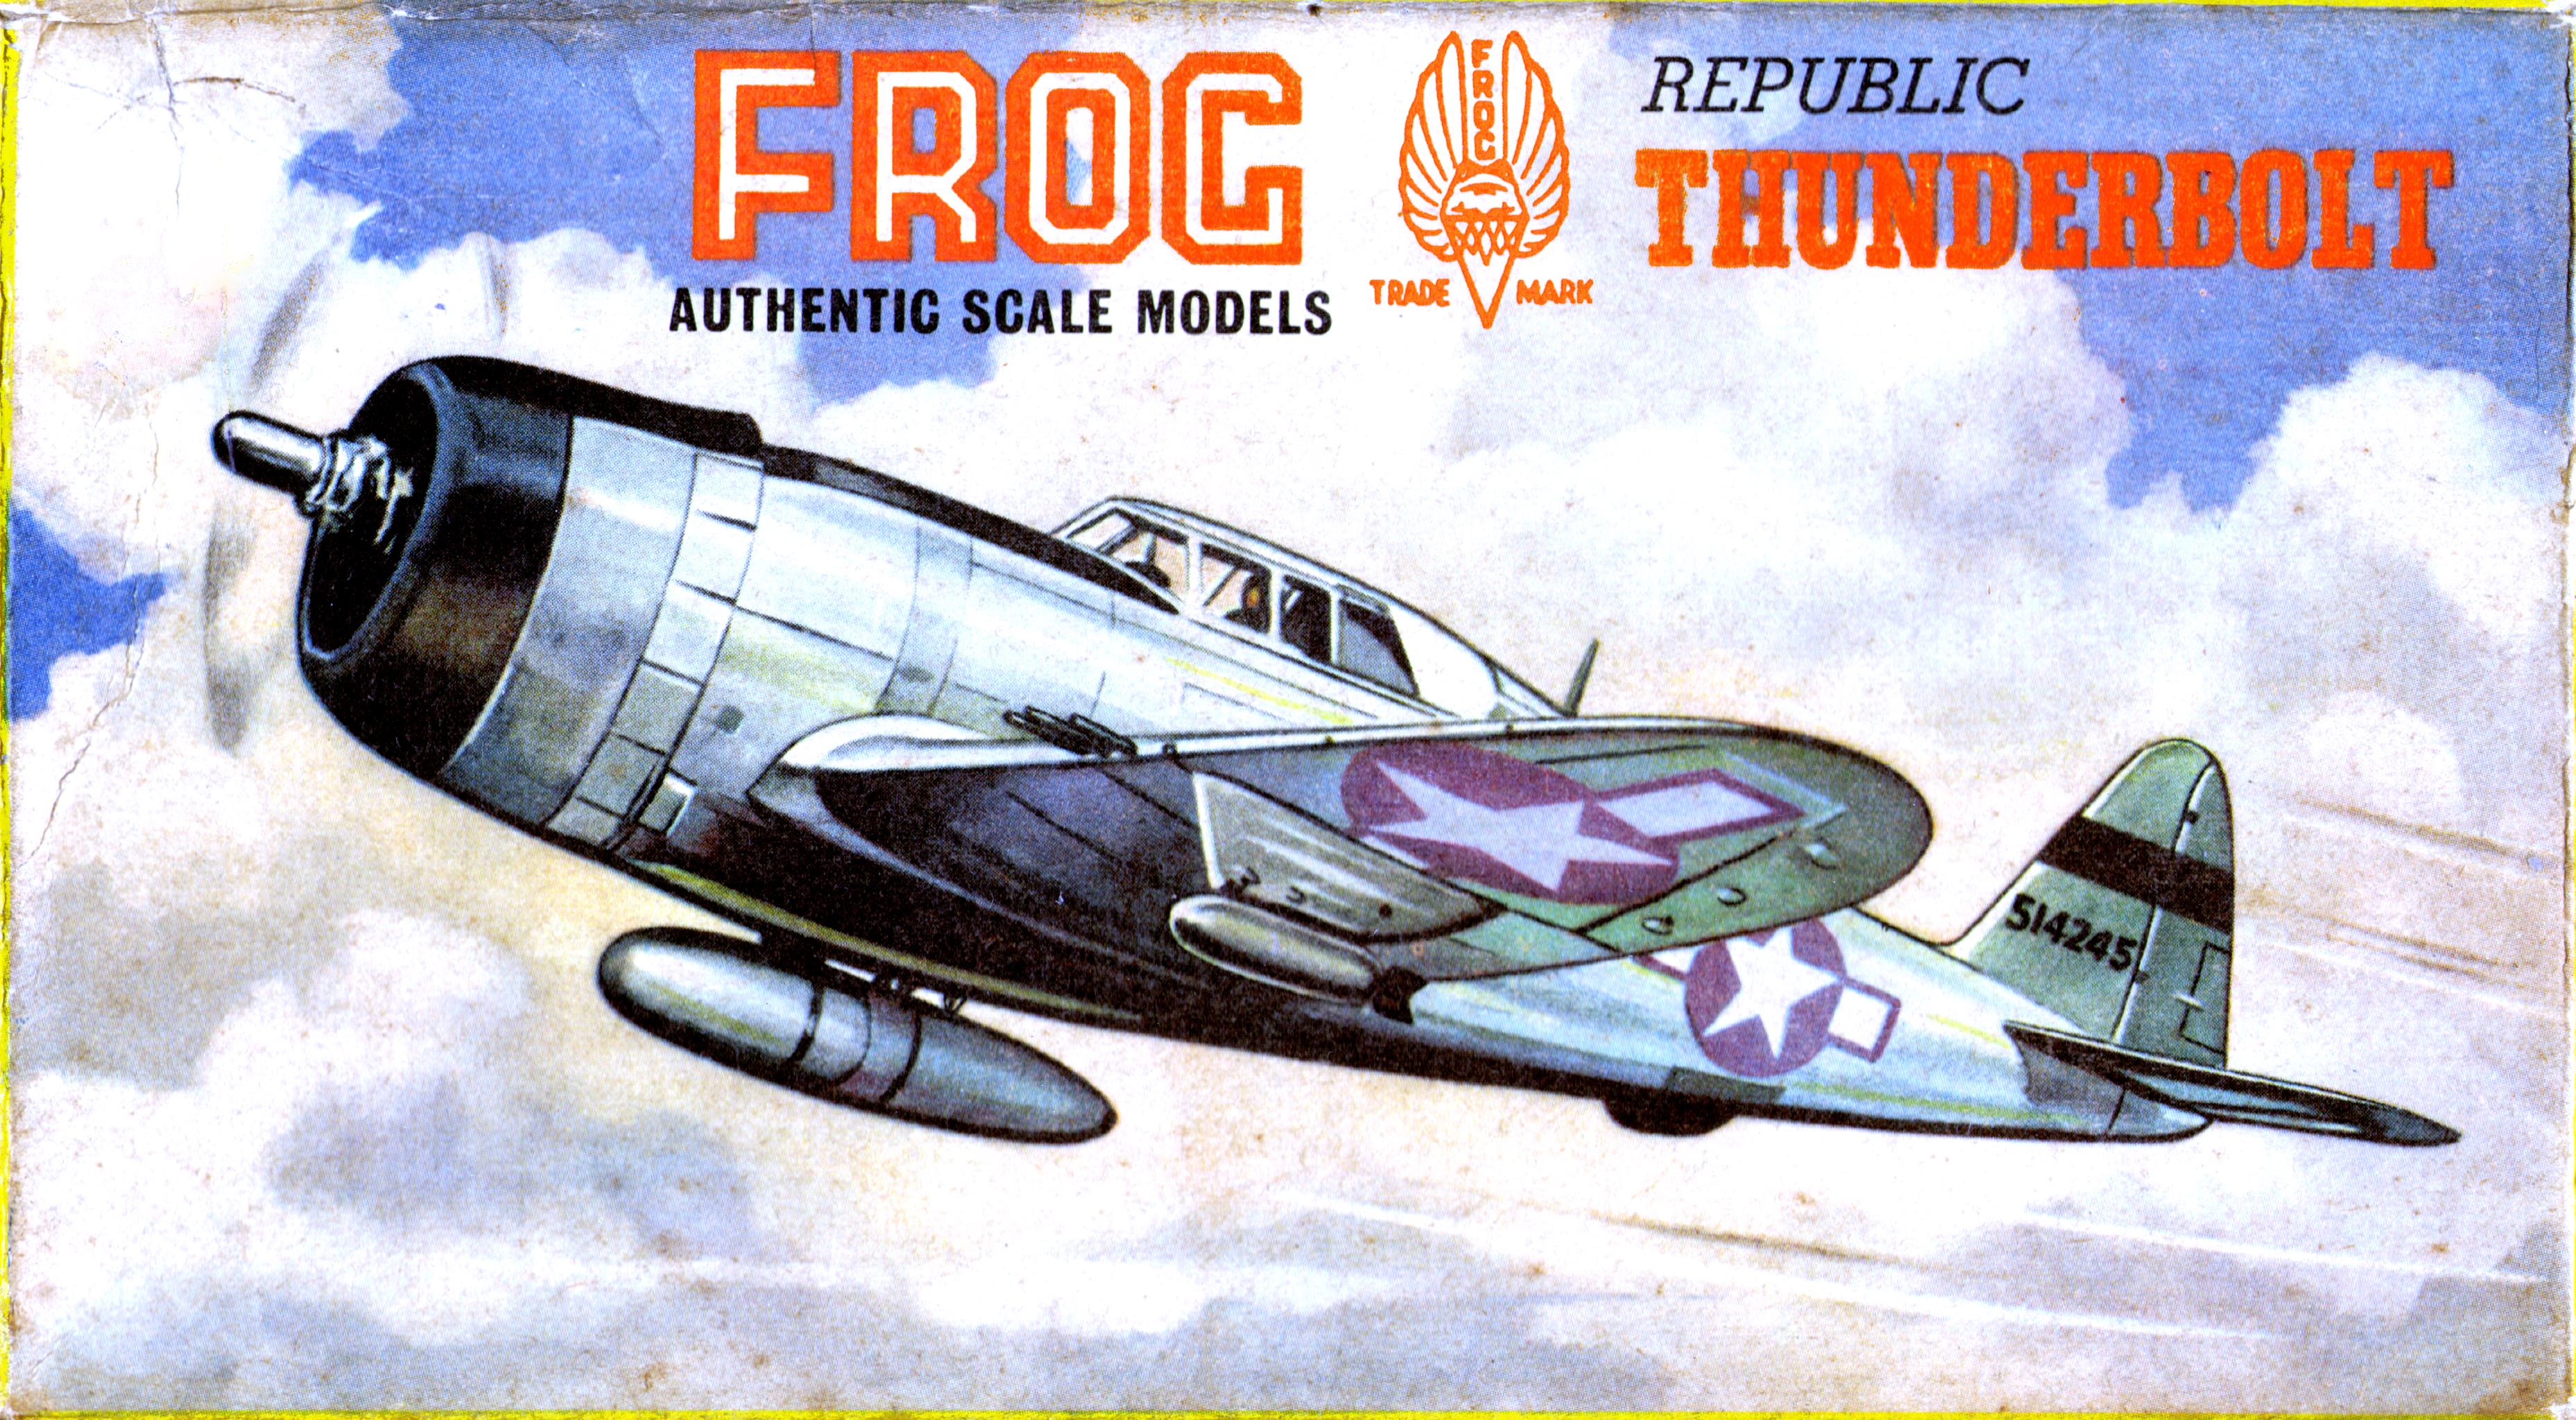 Коробка FROG 390P Republic Thunderbolt, IMA, 1957